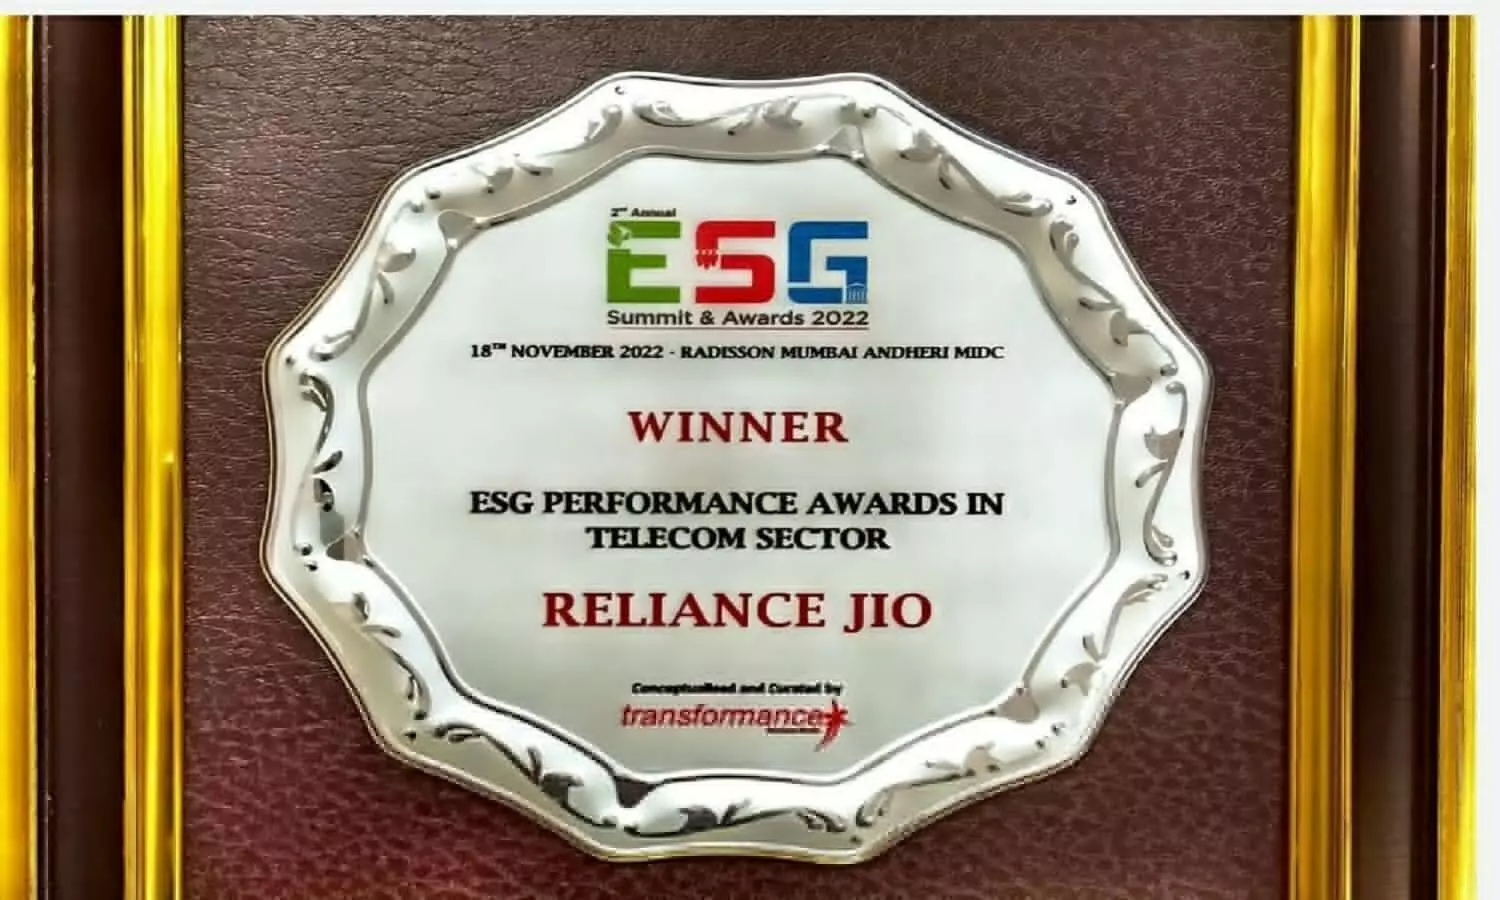 Reliance Jio has bagged the award